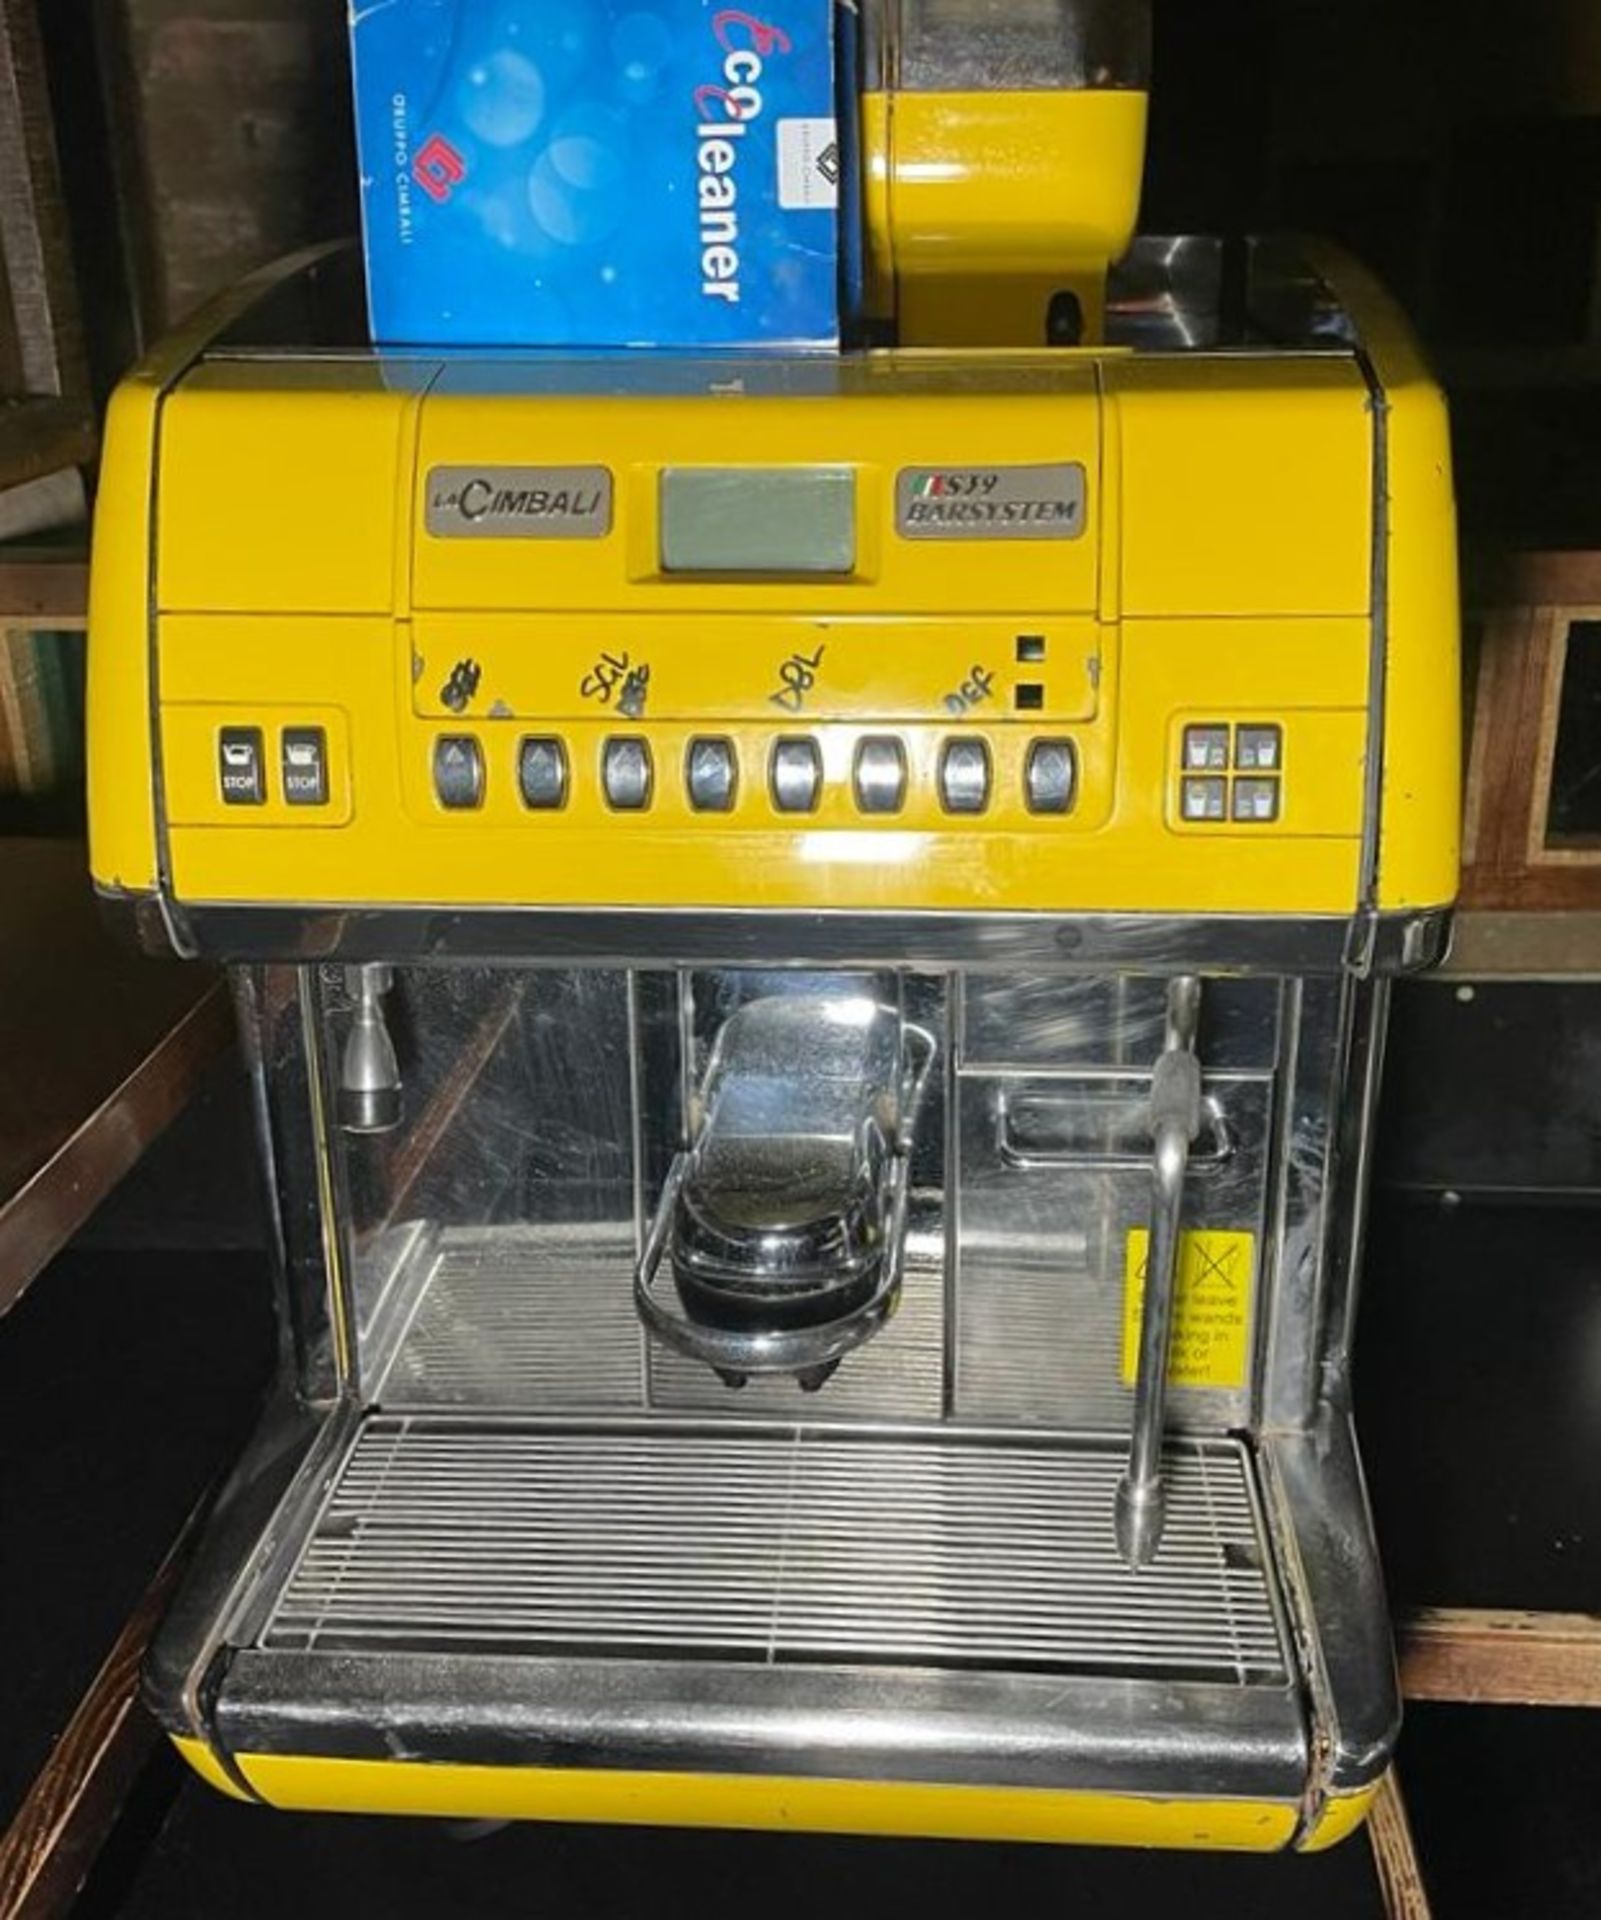 1 x La Cimbali S39 Barsystem Espresso Bean to Cup Coffee Machine - Bright Yellow Finish - 240V Plug - Image 8 of 14